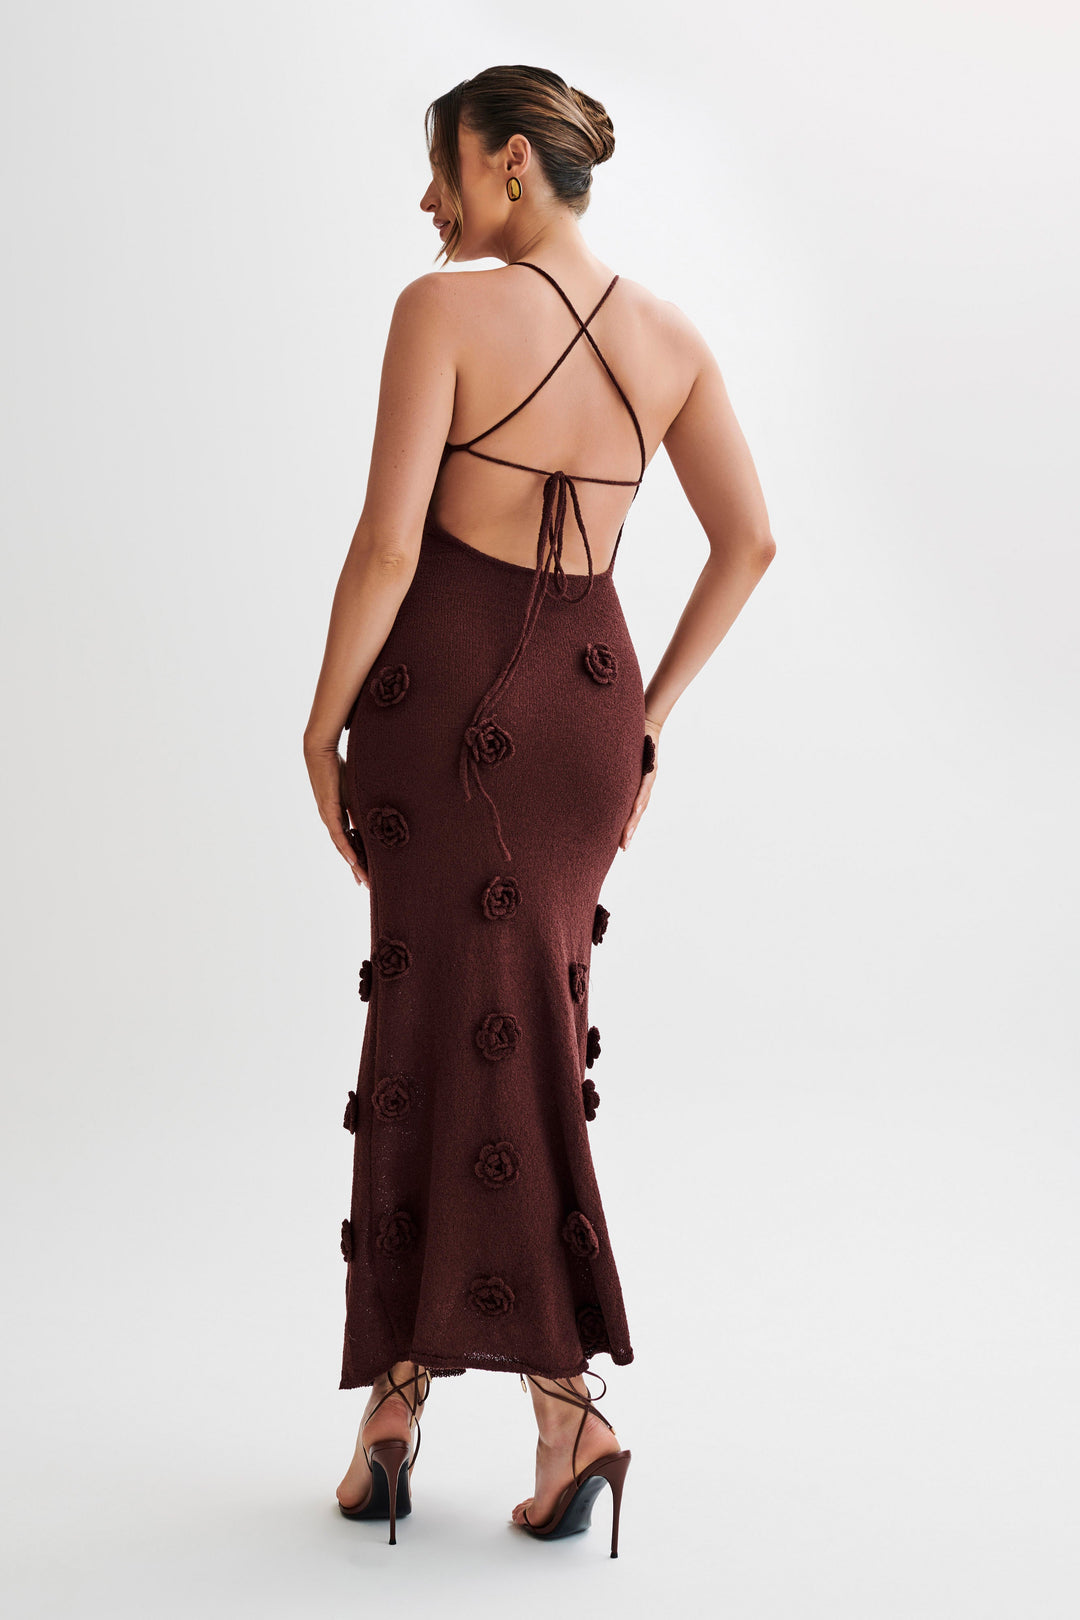 Leliya Backless Knit Elegant Dress aclosy